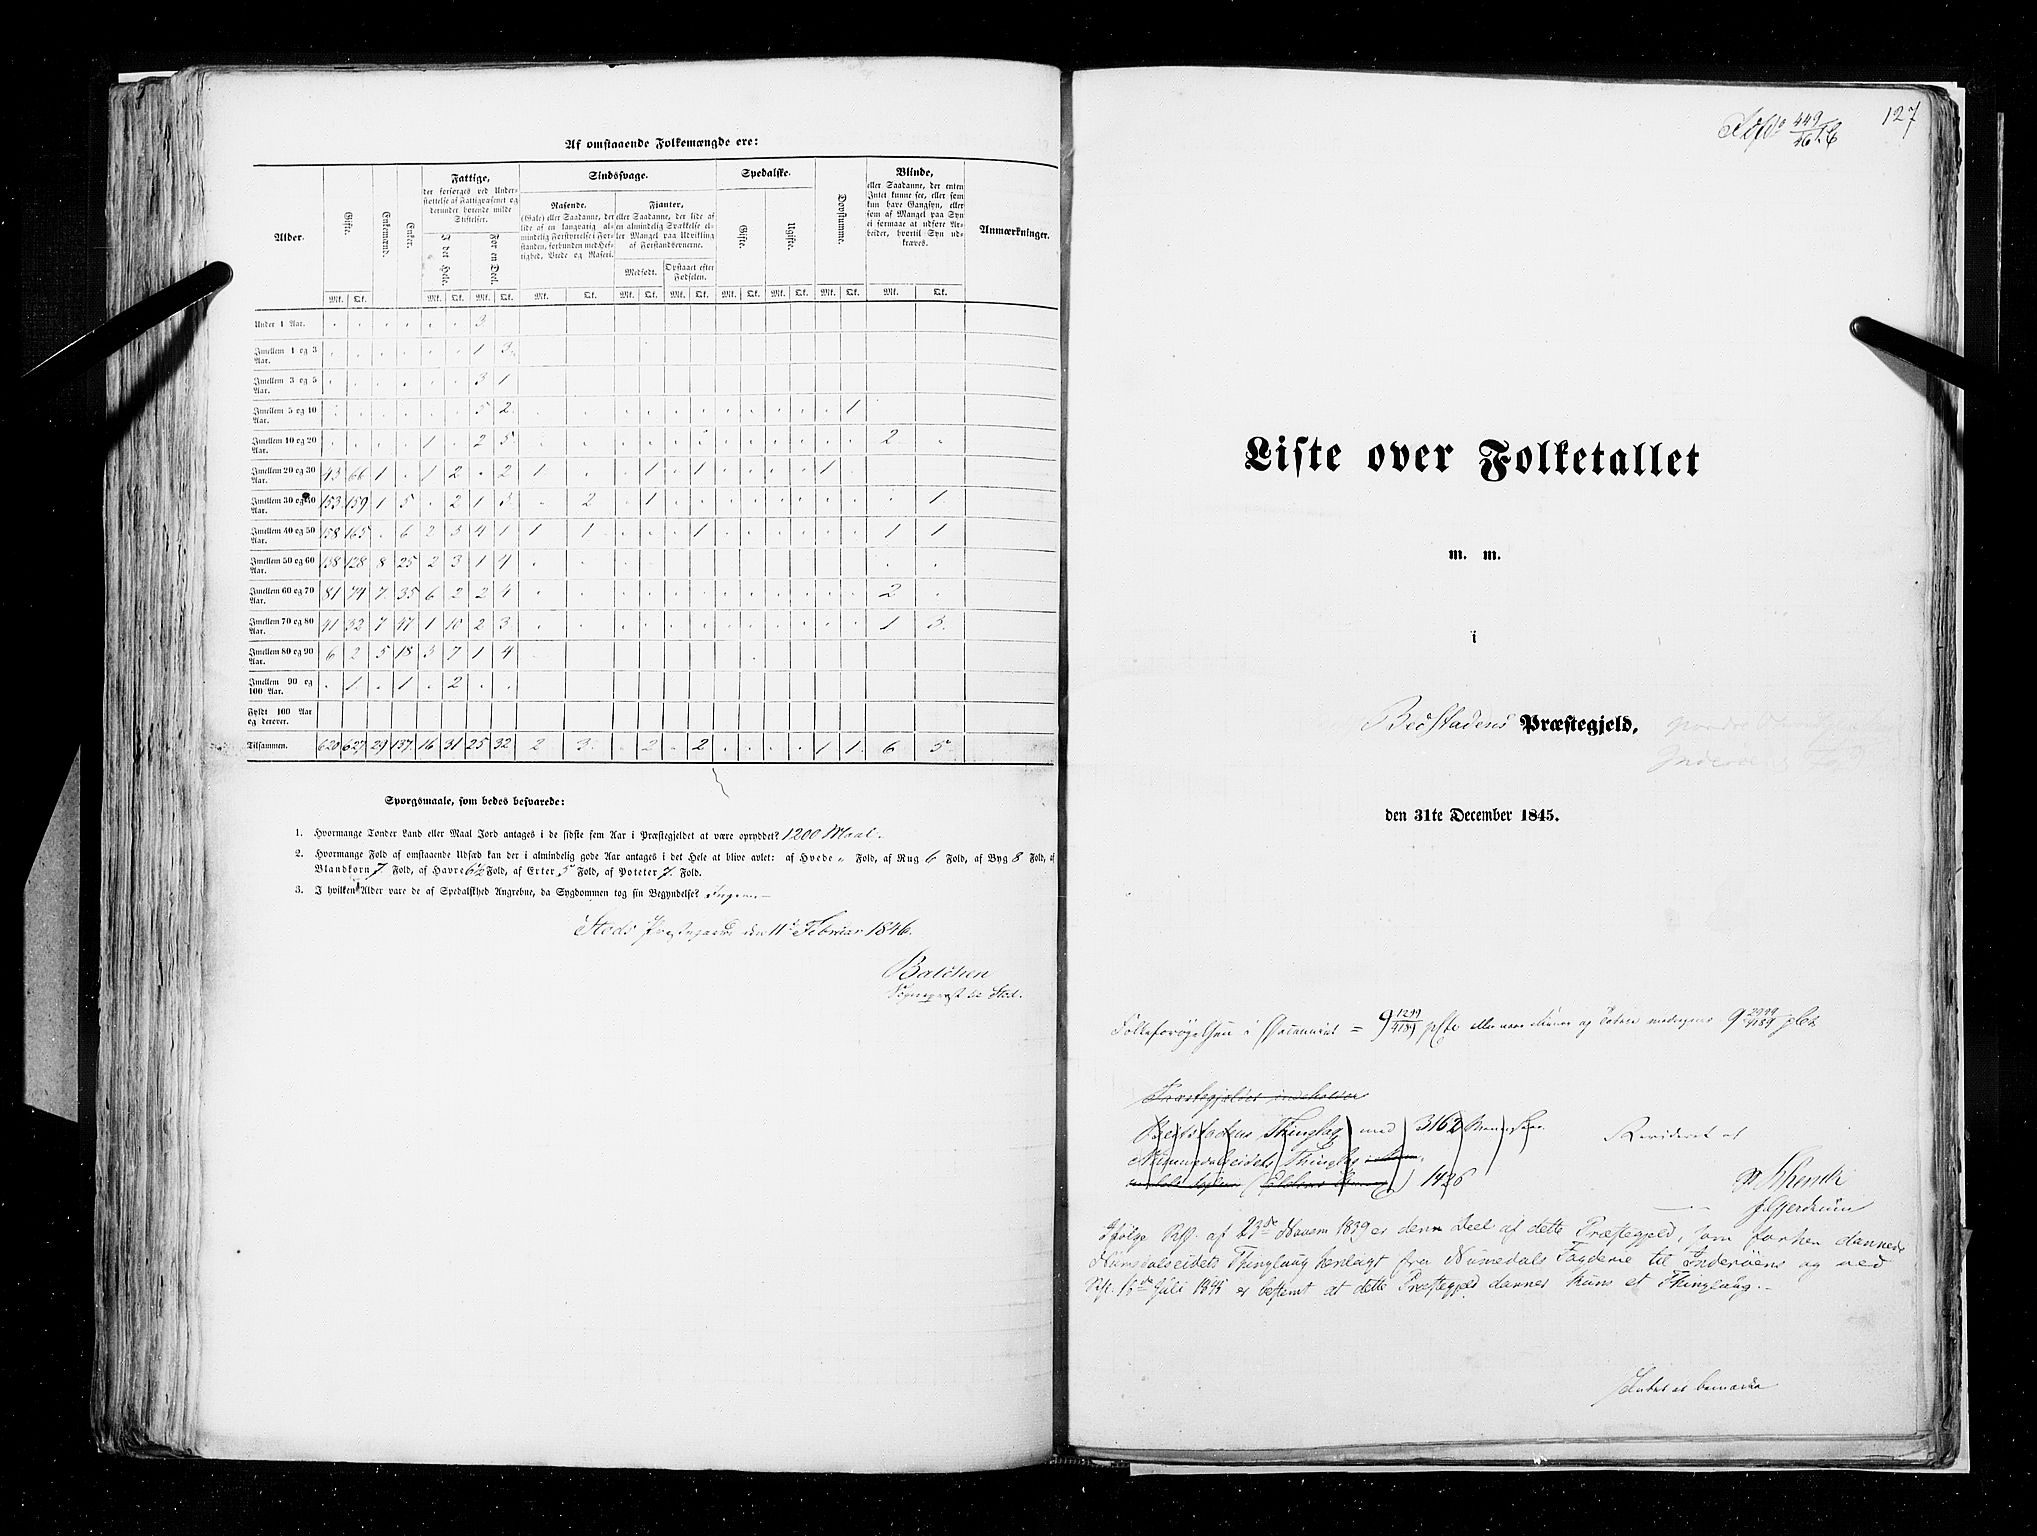 RA, Census 1845, vol. 9A: Nordre Trondhjems amt, 1845, p. 127